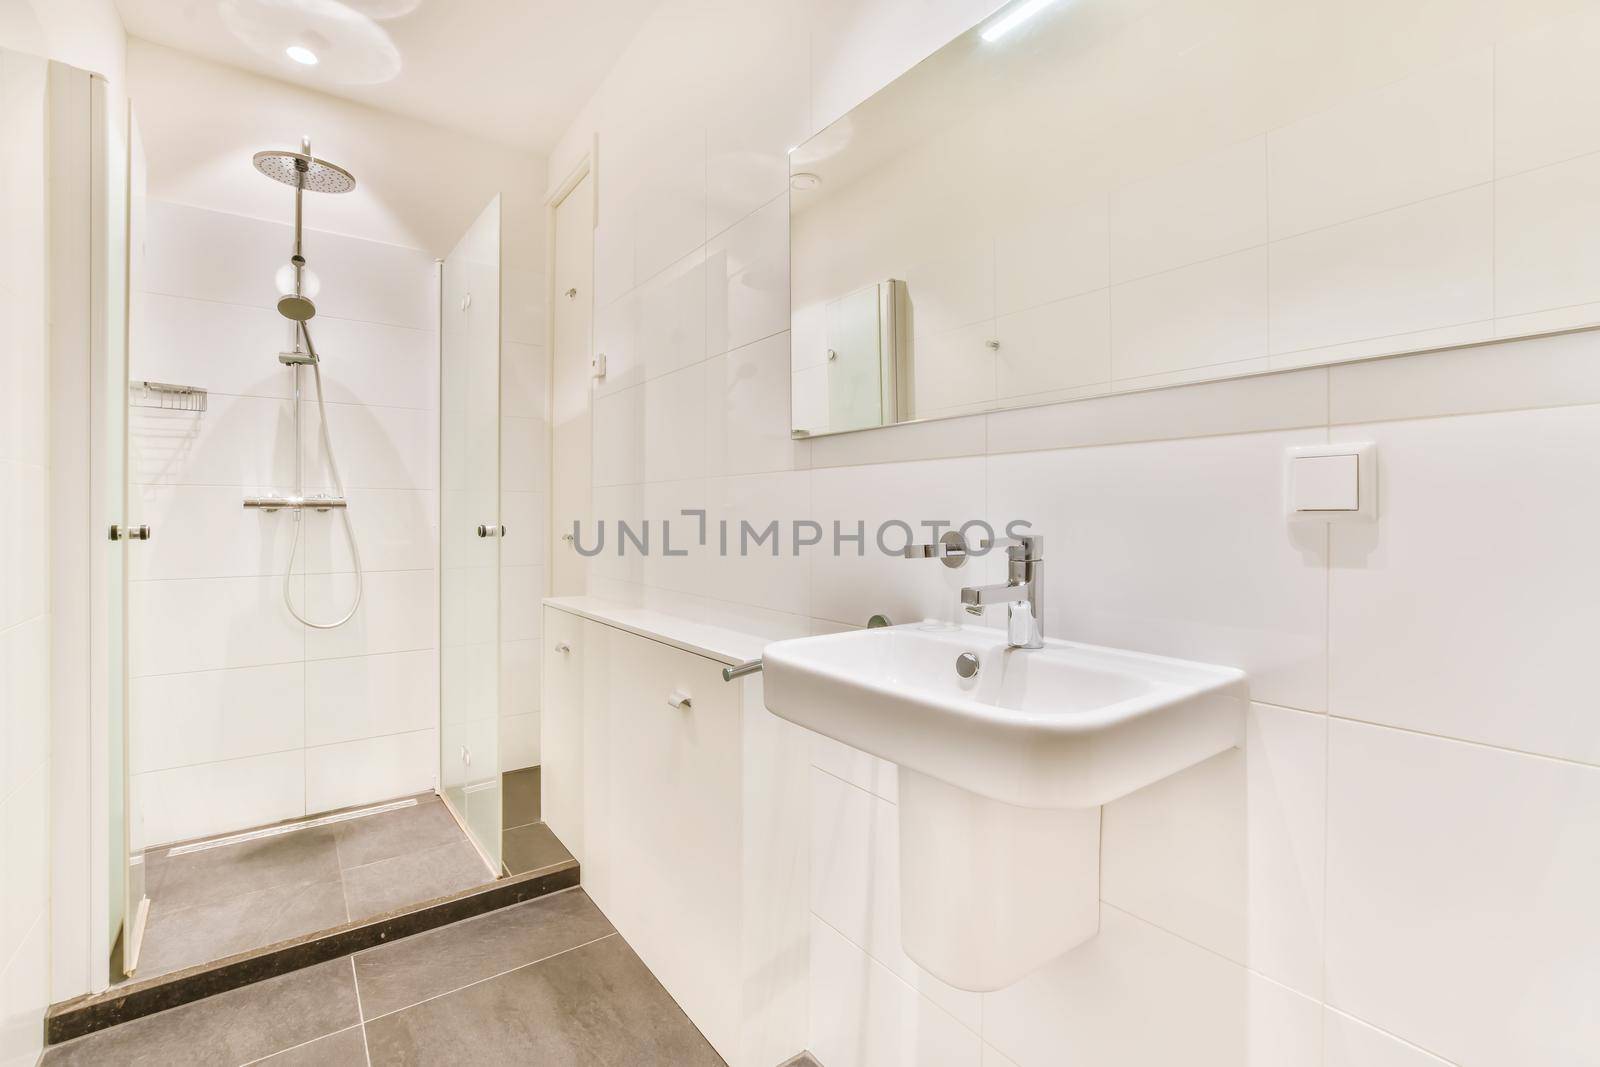 Shower room design by casamedia